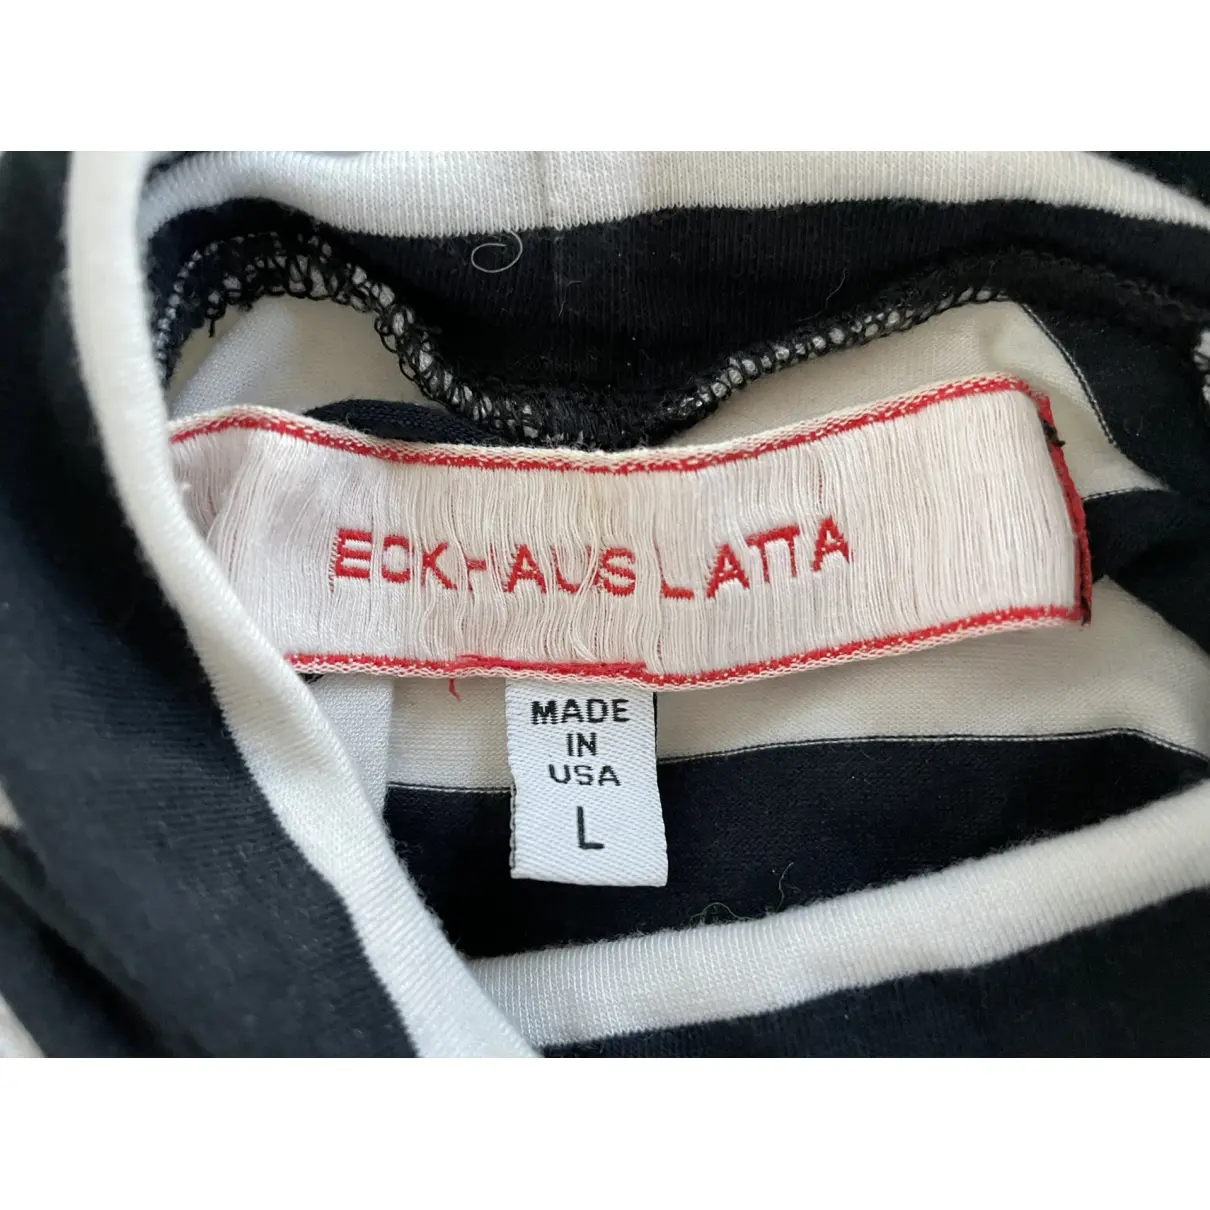 Buy Eckhaus Latta Shirt online